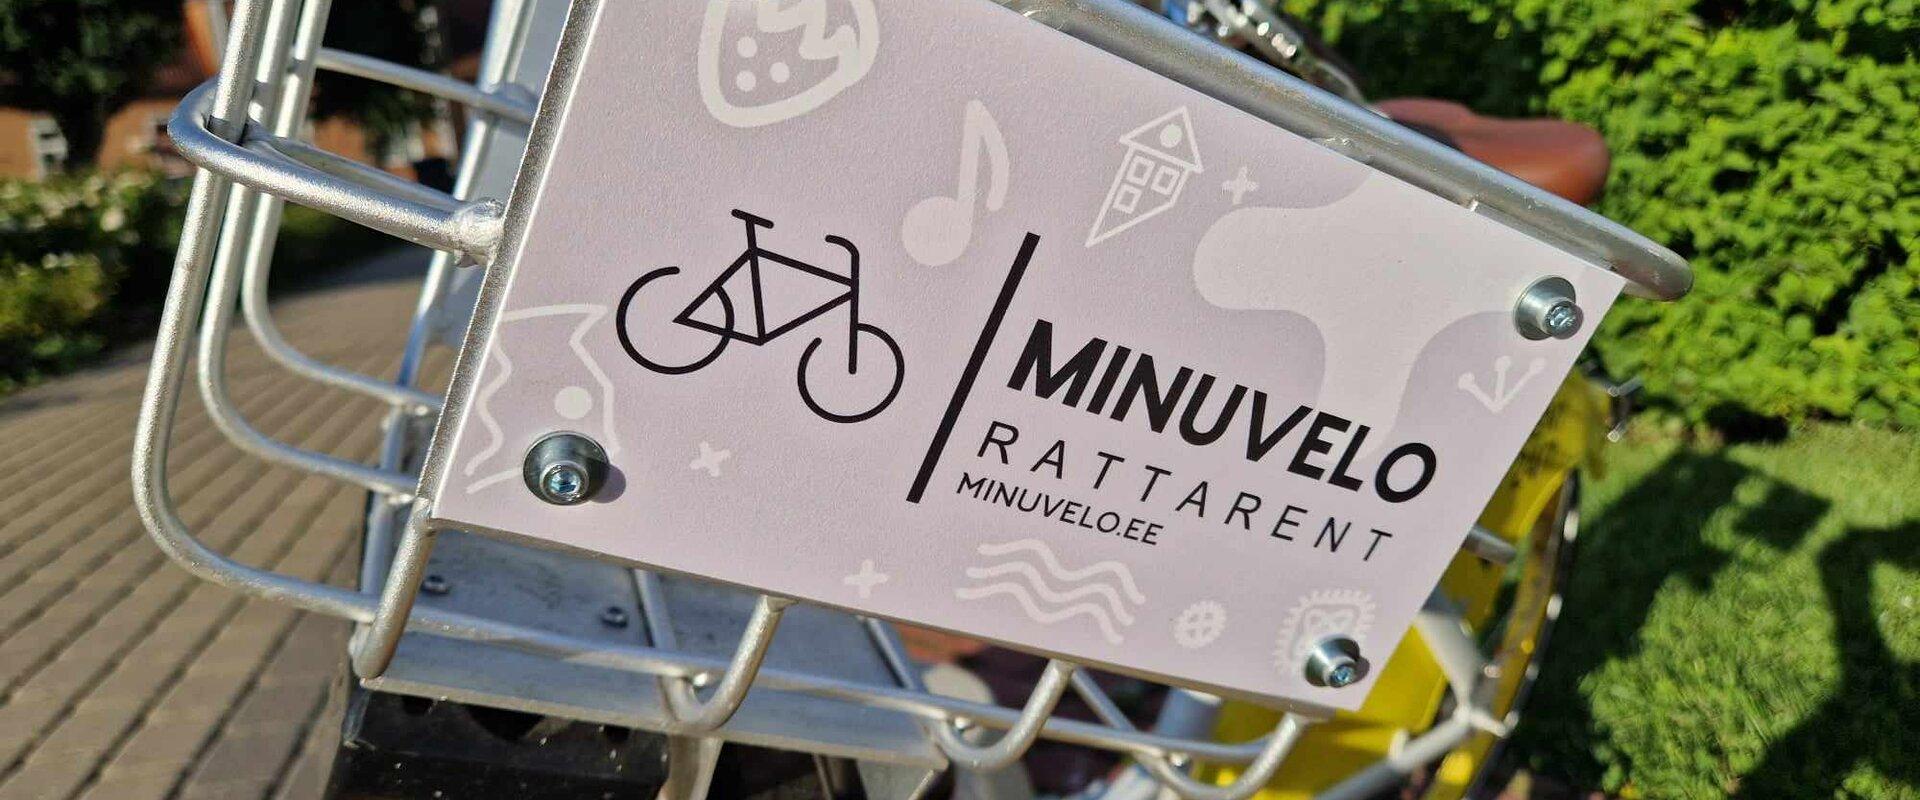 Minuvelo-pyörävuokra Viljandissa